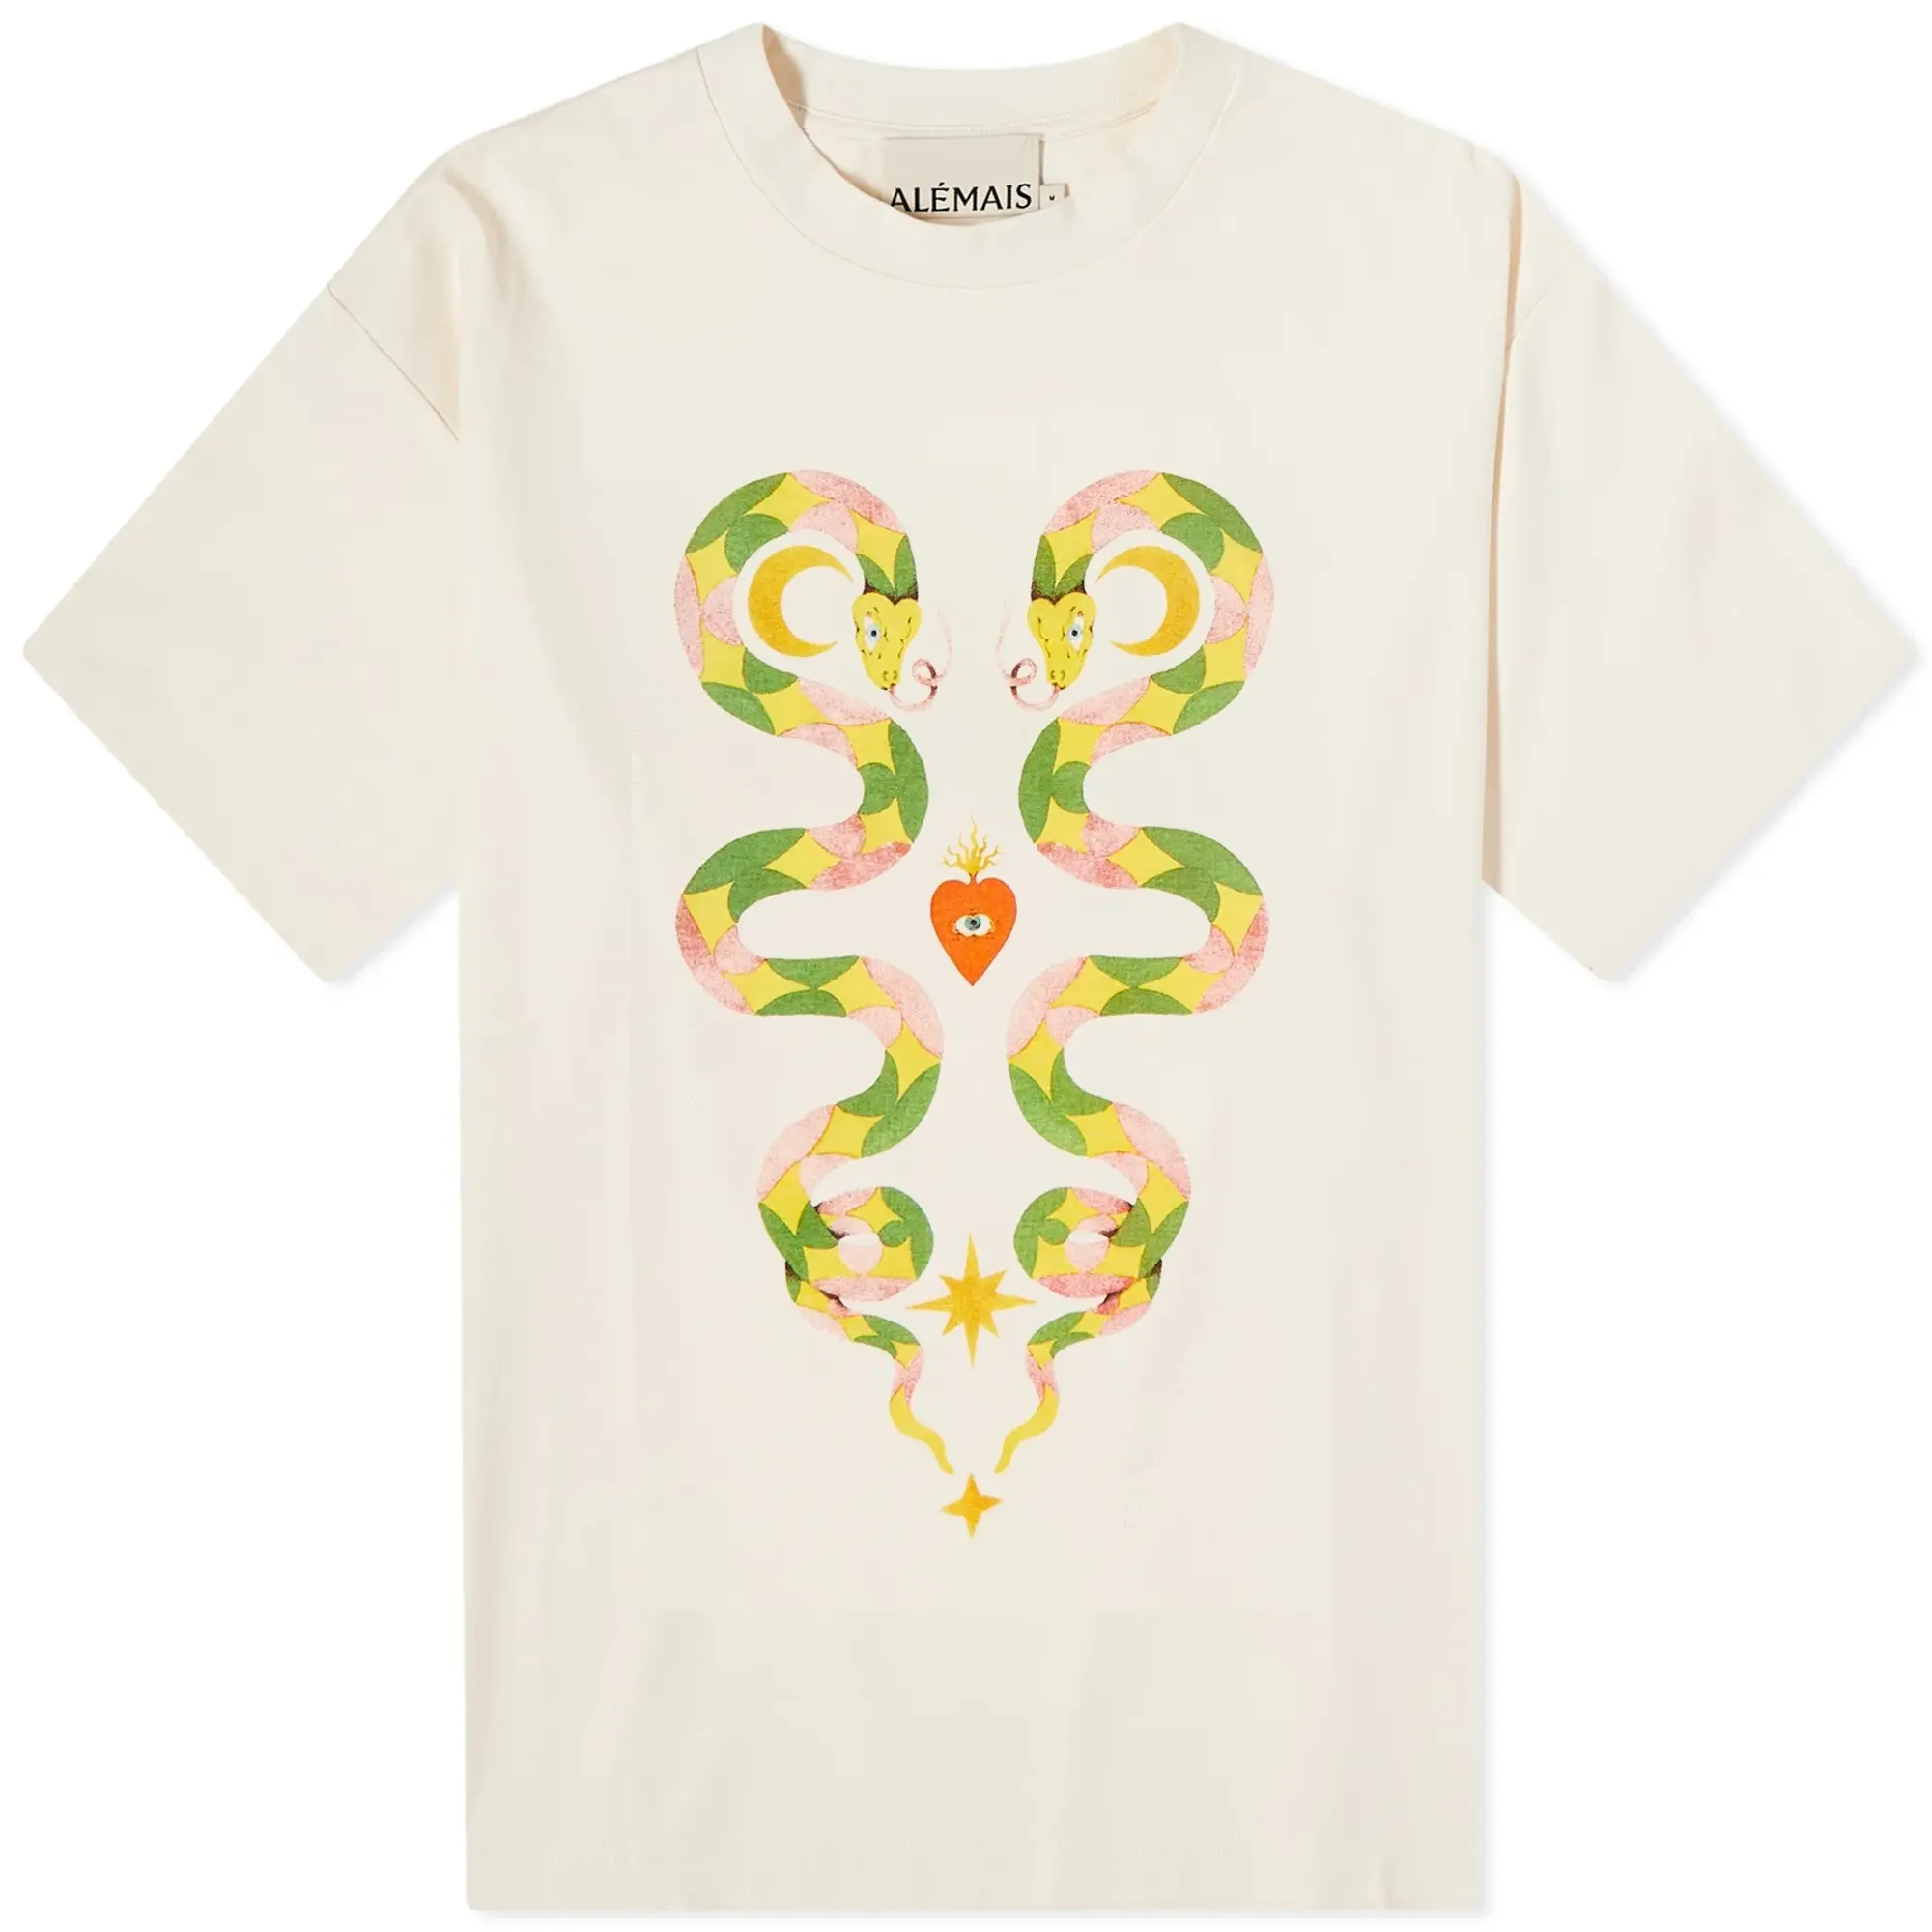 Alemais ALÉMAIS Lou Heart T-Shirt Cream/Multi